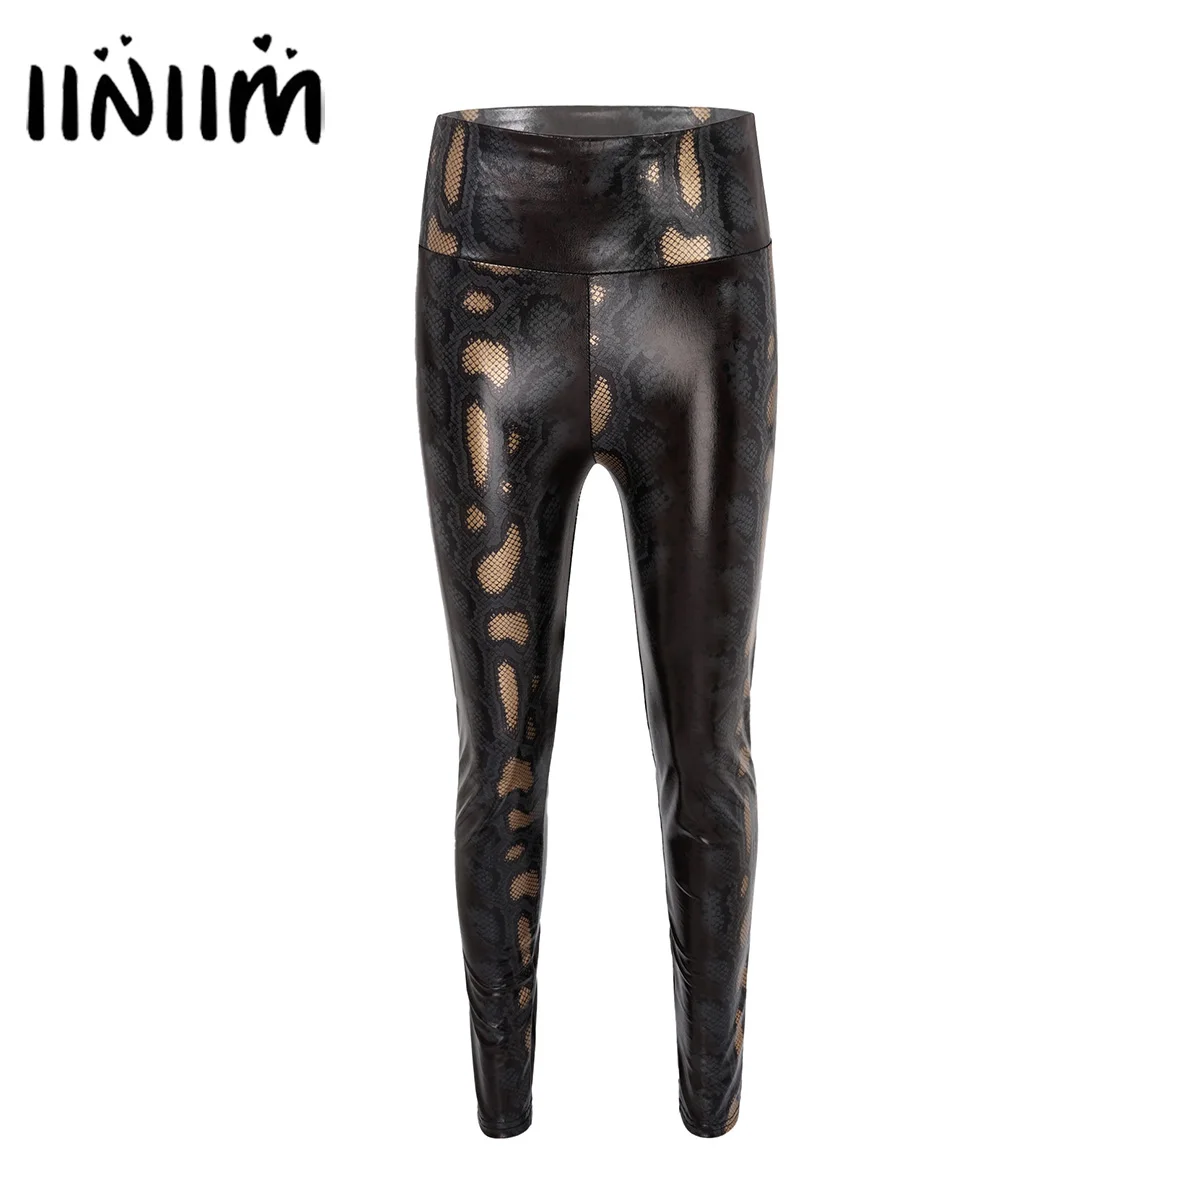 

iiniim Women Fashion Snakeskin Print Faux Leather Leggings High Waist Skinny Pants Bottom for Nightclub Vocal Concert